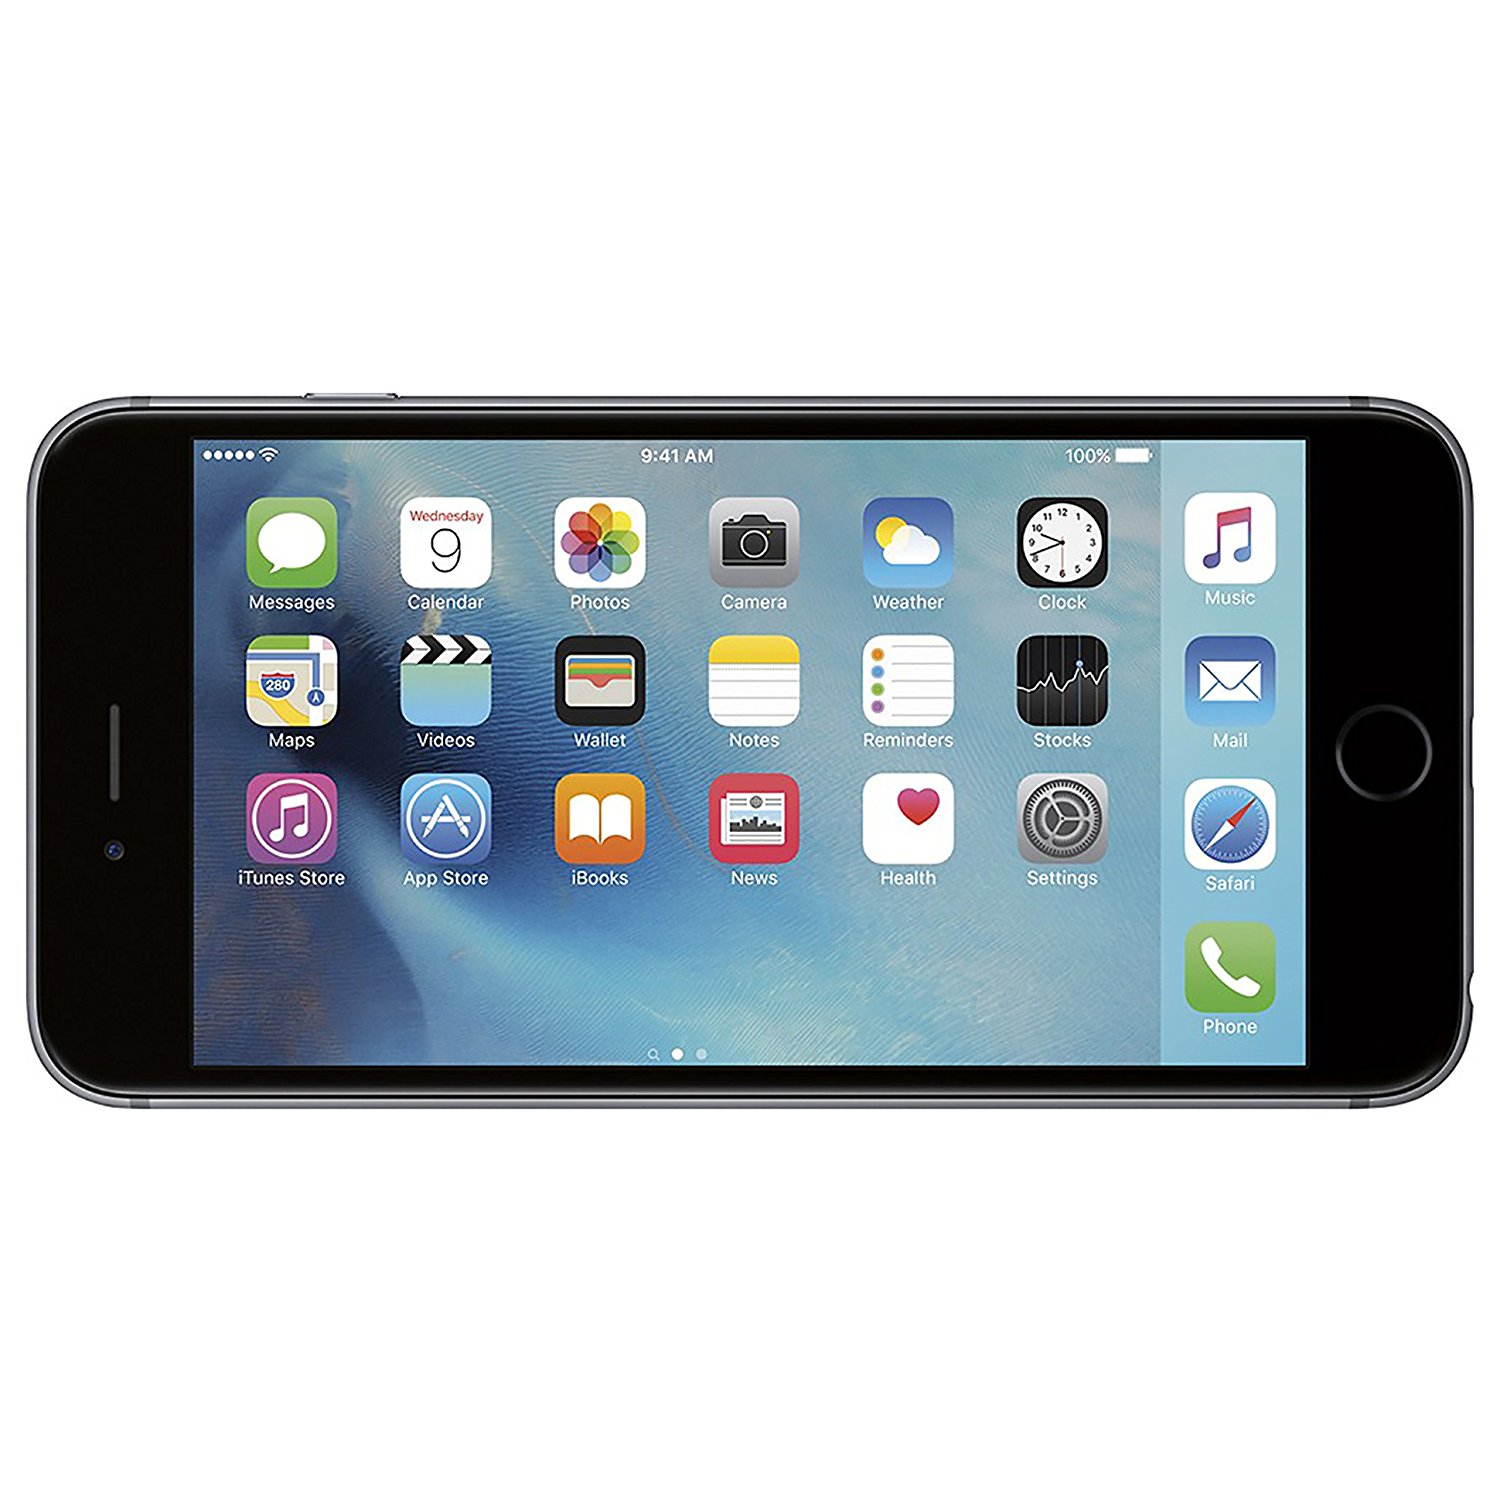 Apple iPhone 6S Plus 64 GB T-Mobile, Space Grey - BIG nano - Best ...